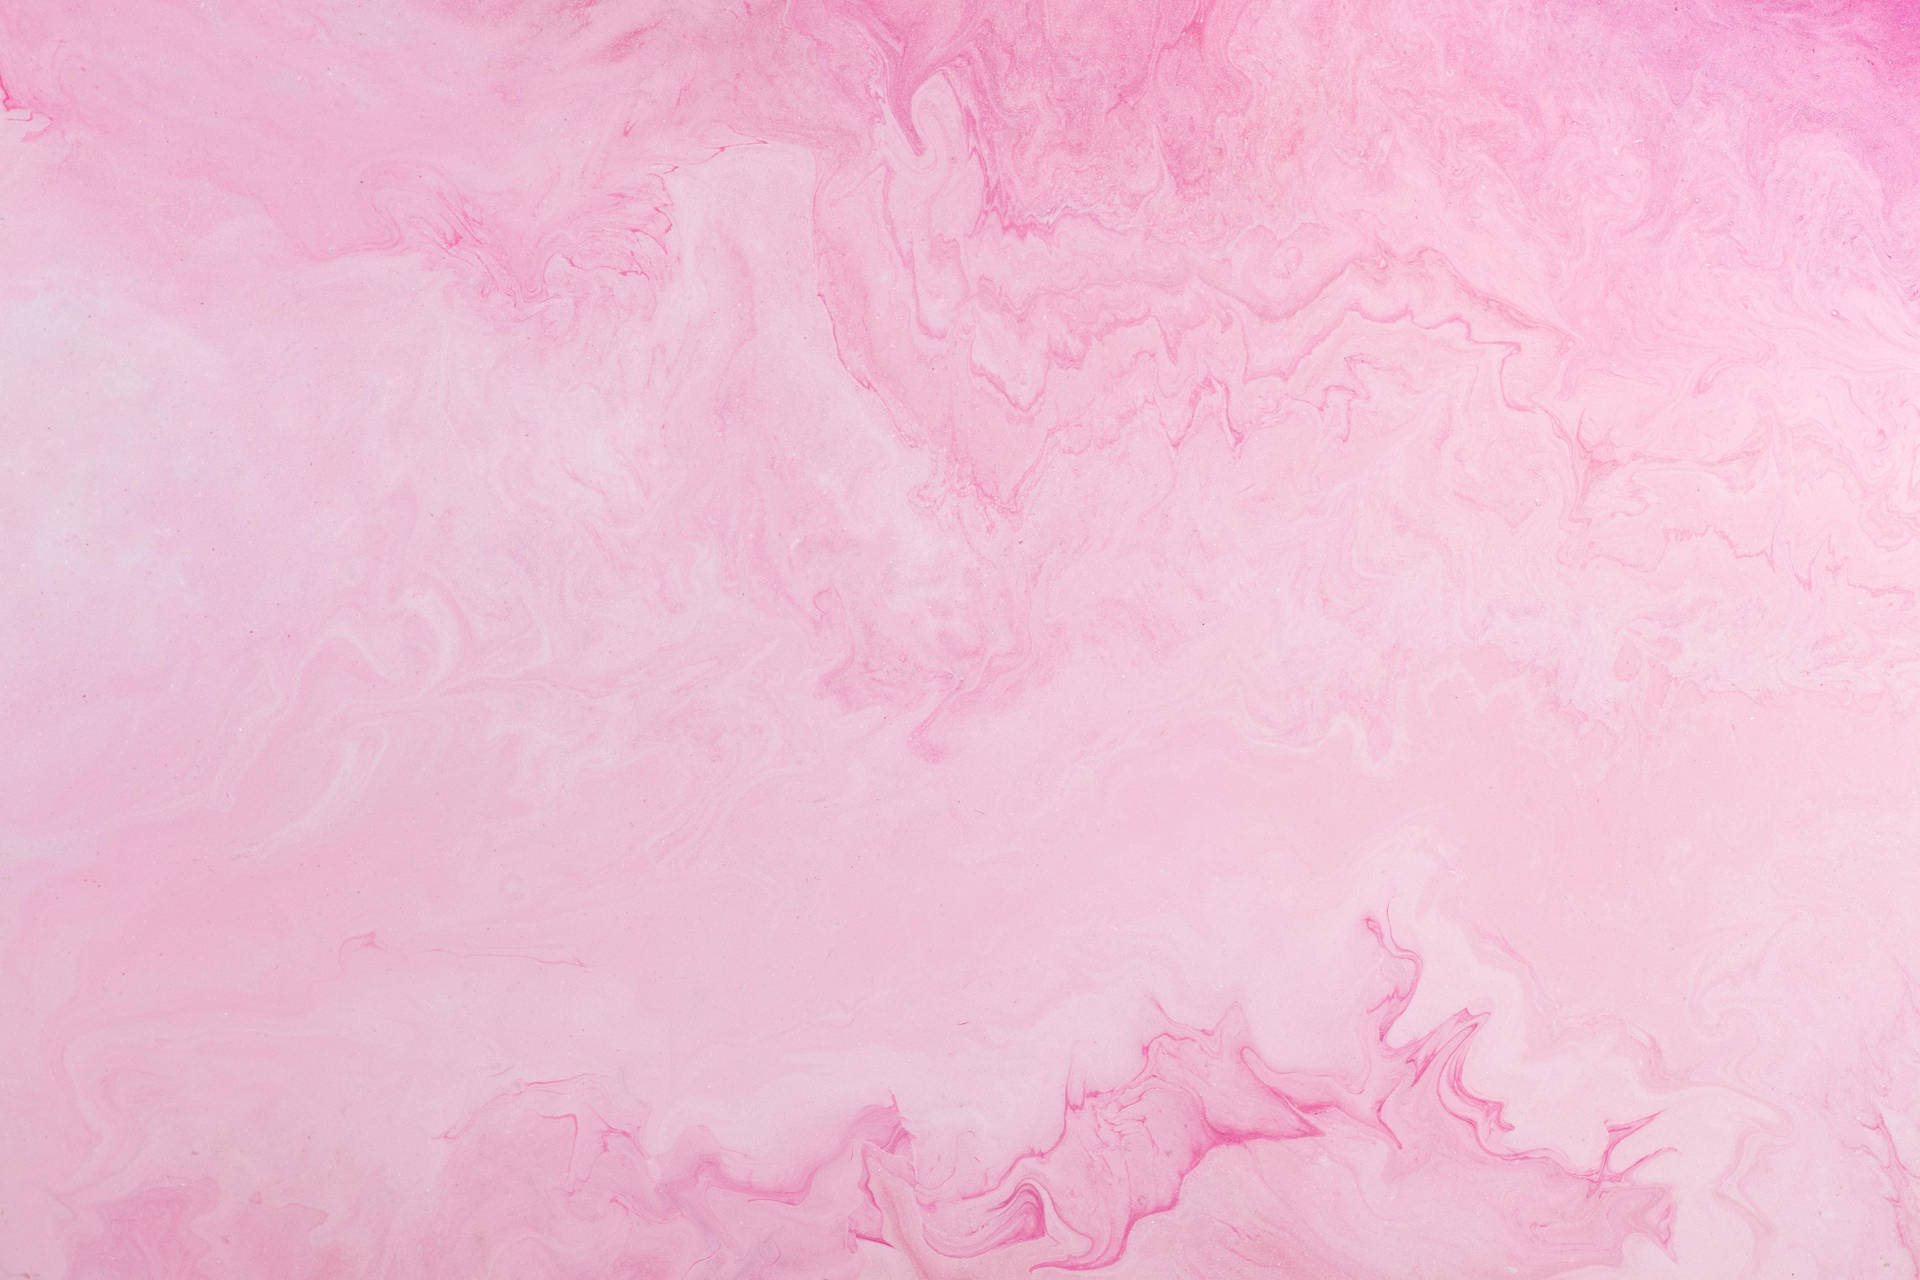 High Res Pink Watercolor Texture Wallpaper